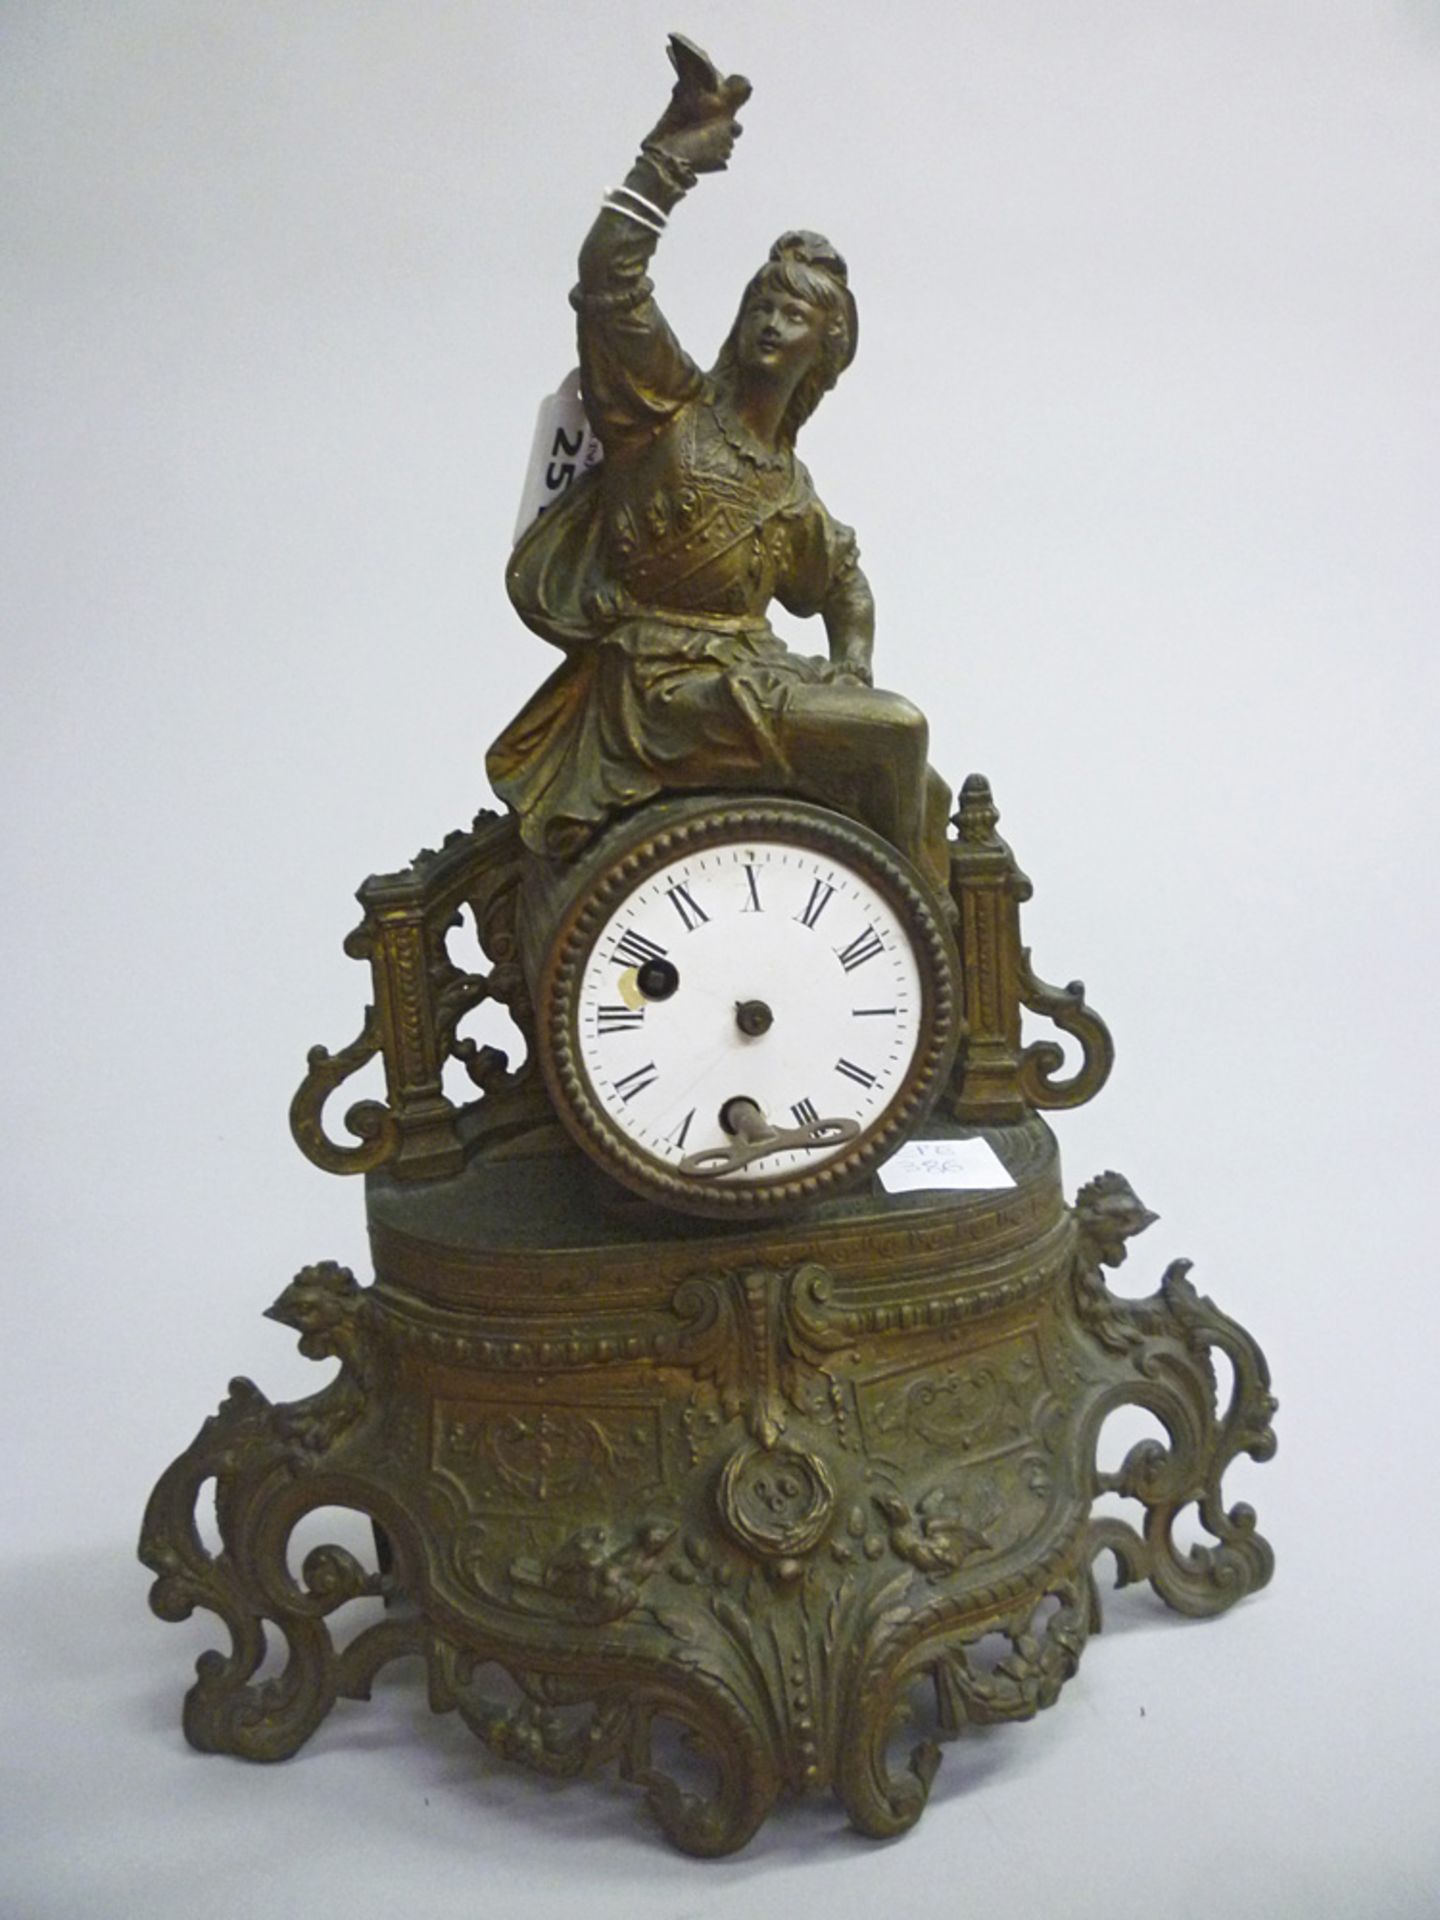 BURNISHED METAL CLOCK, 19TH CENTURY